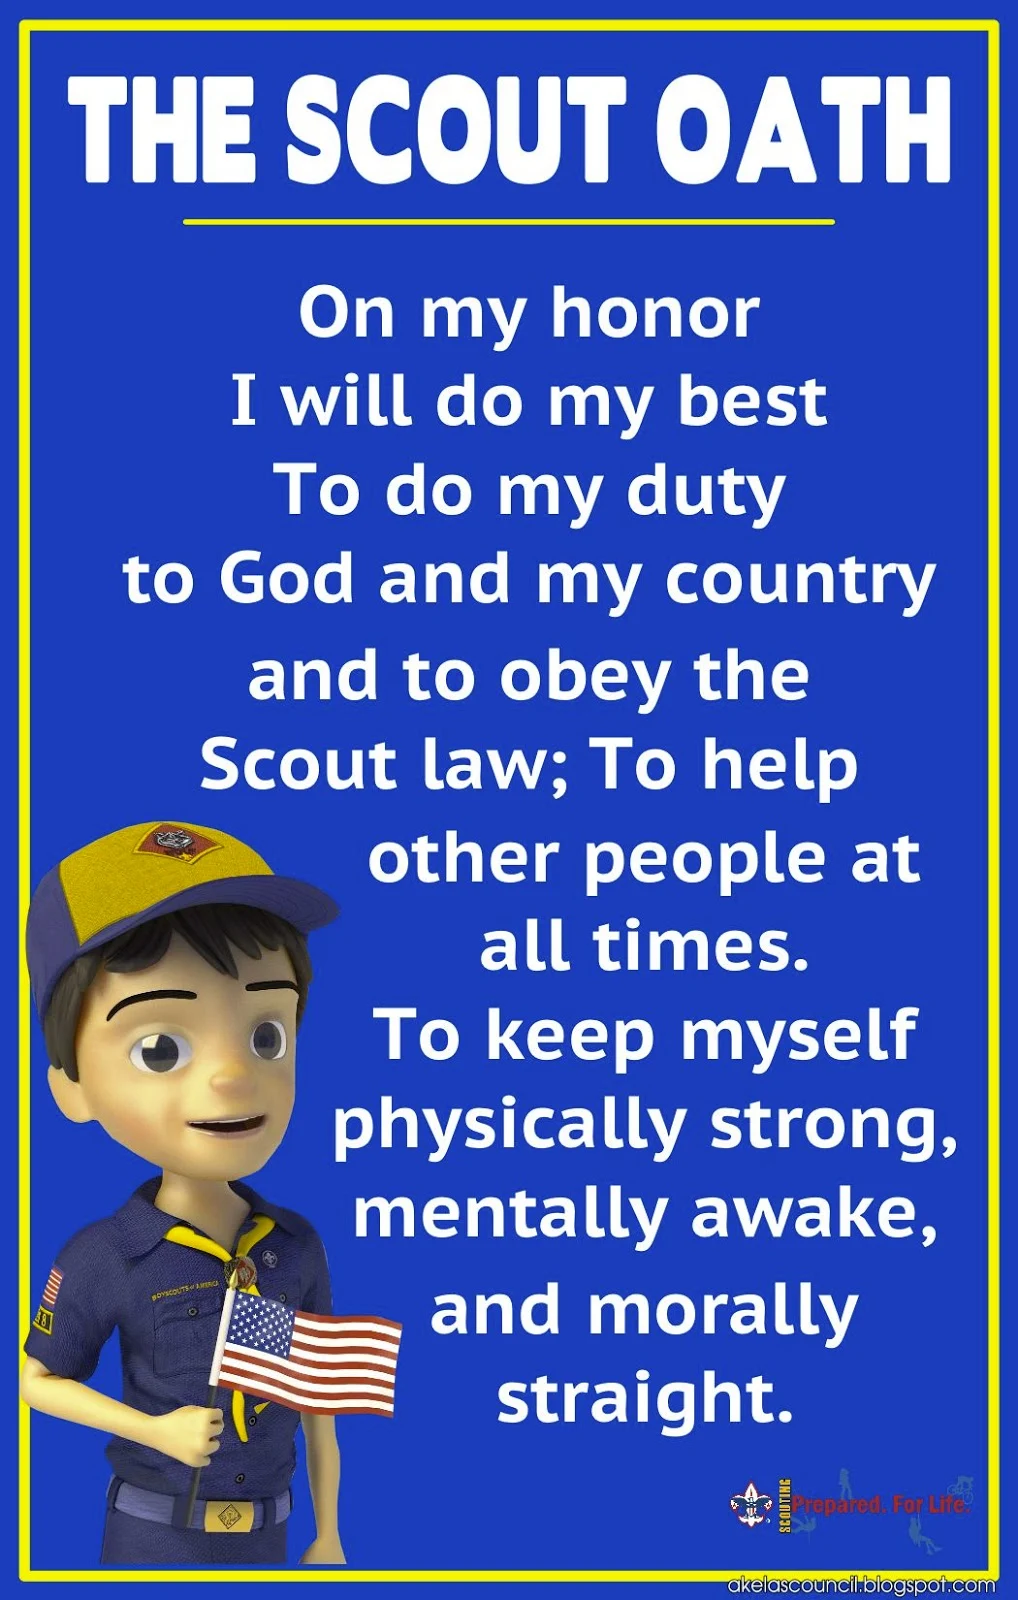 Akela's Council Cub Scout Leader Training Cub Scout Law Poster & Cub